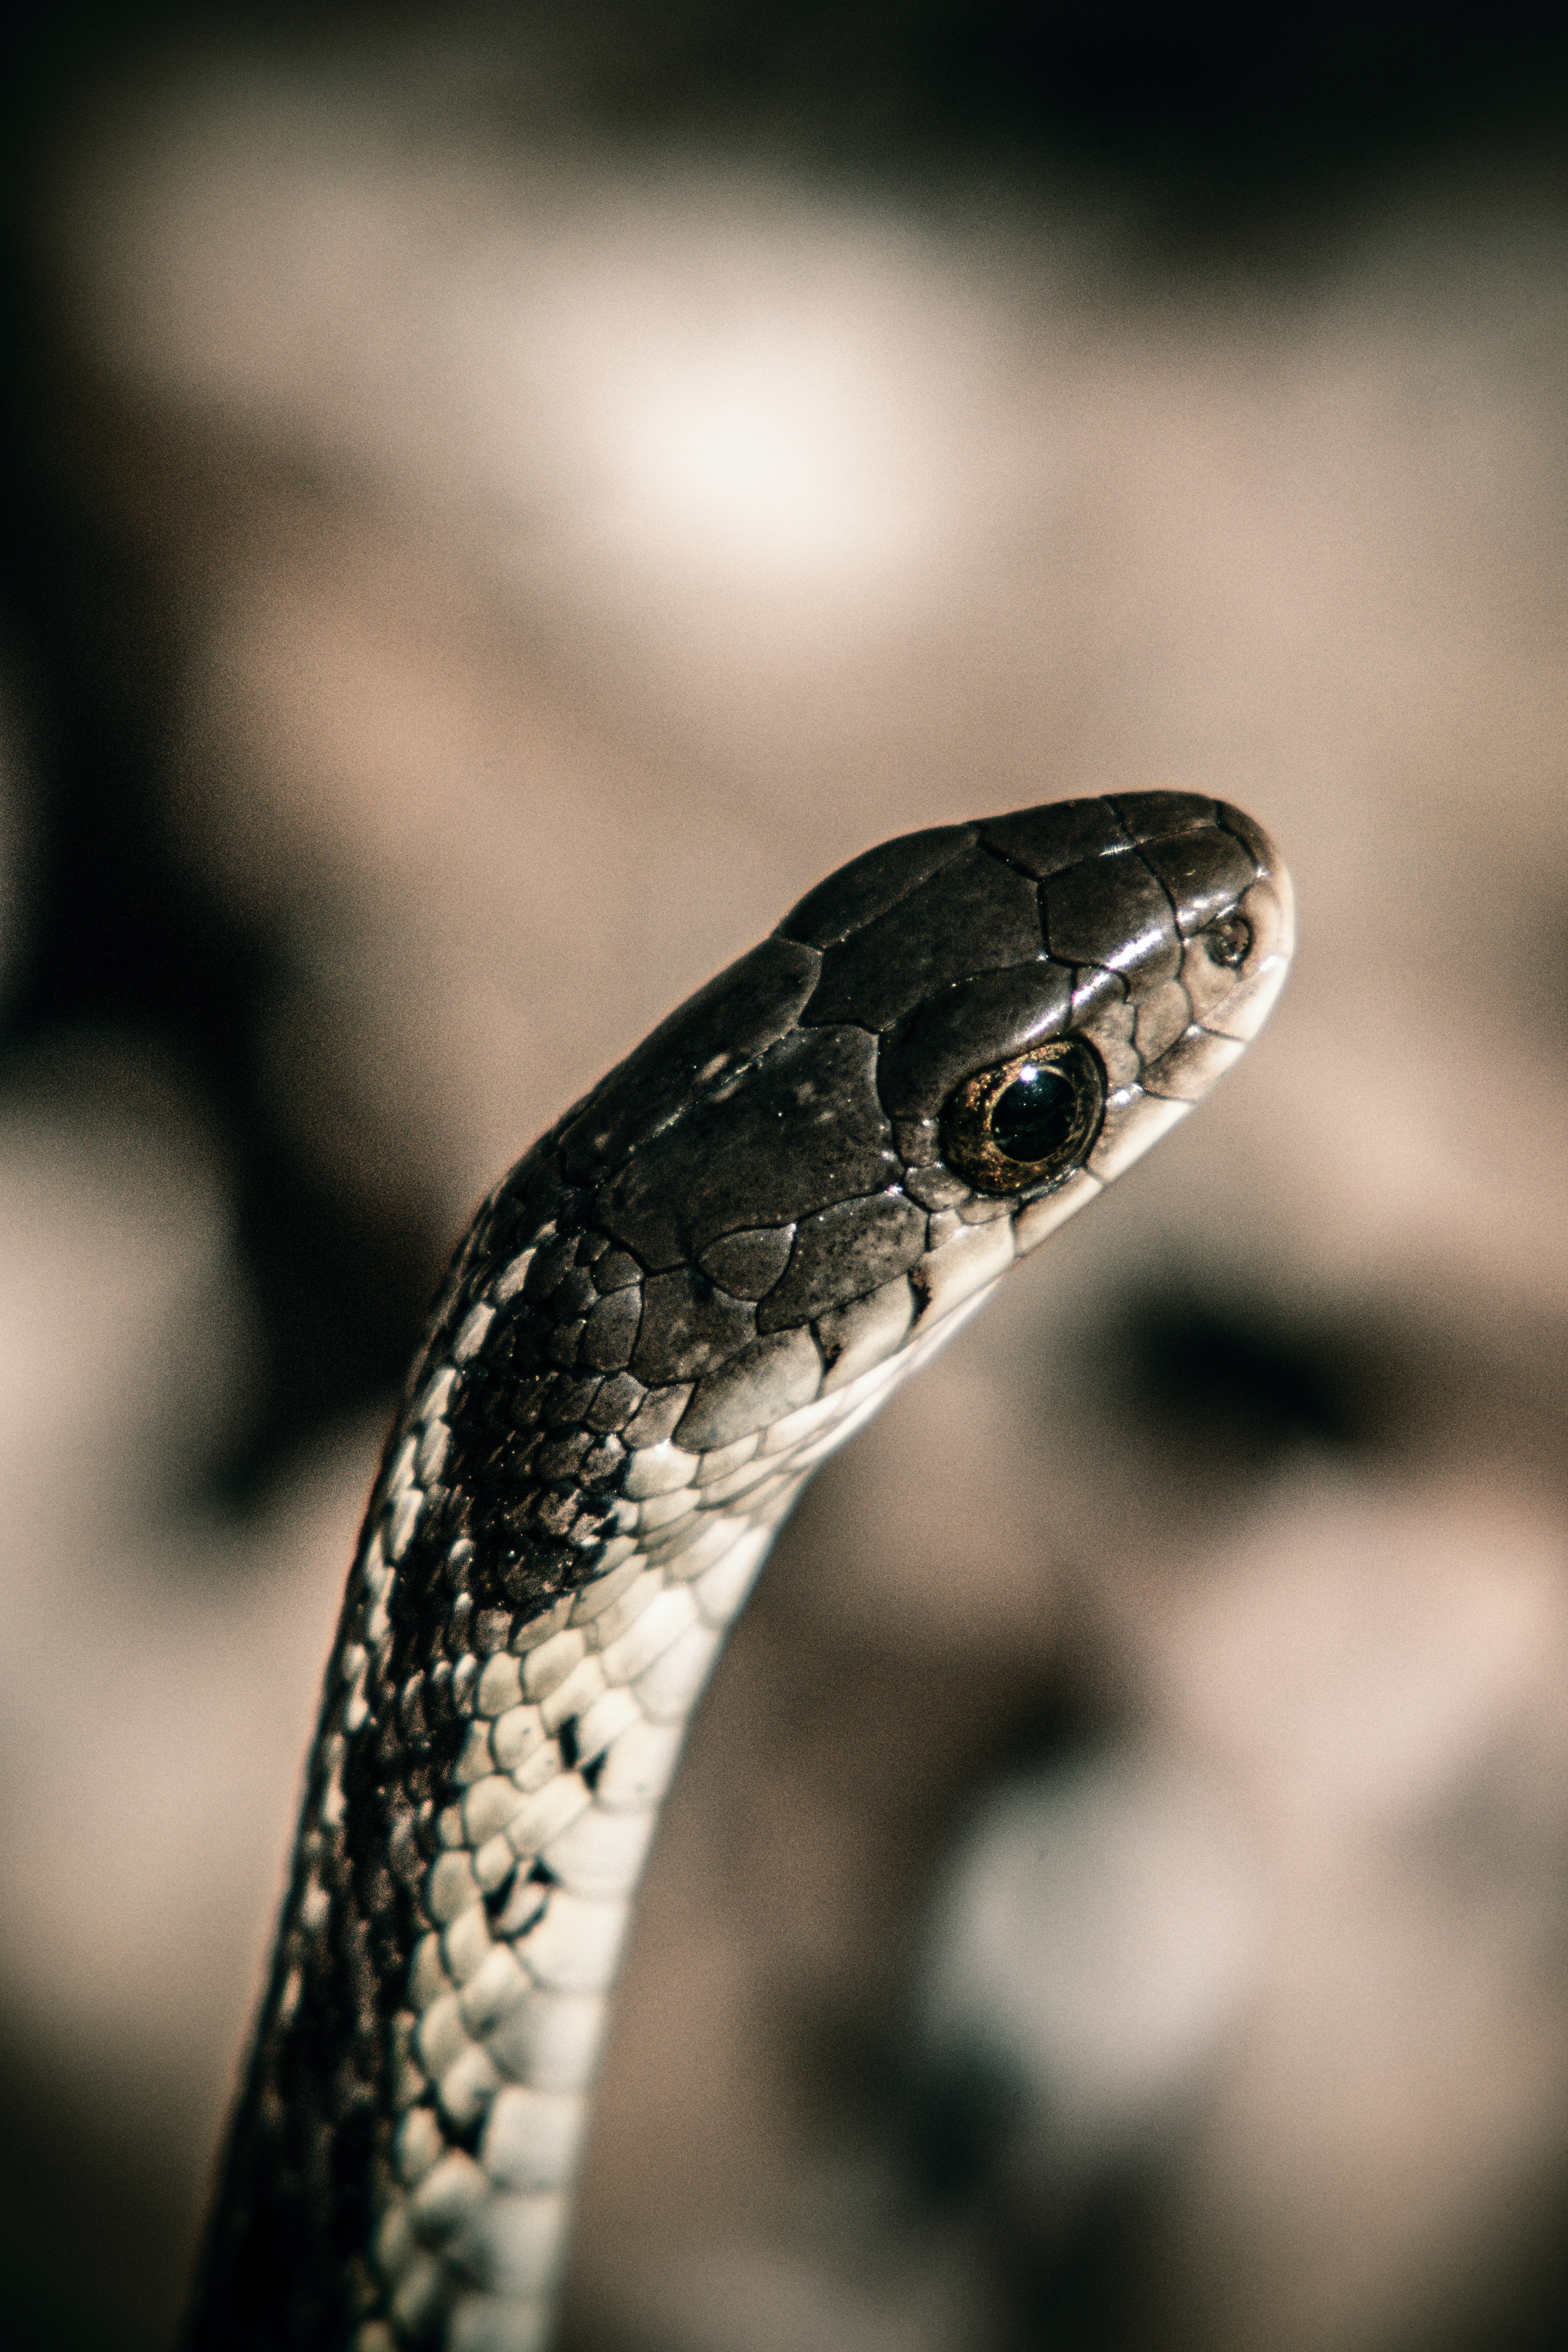 Garter Snakes Facts